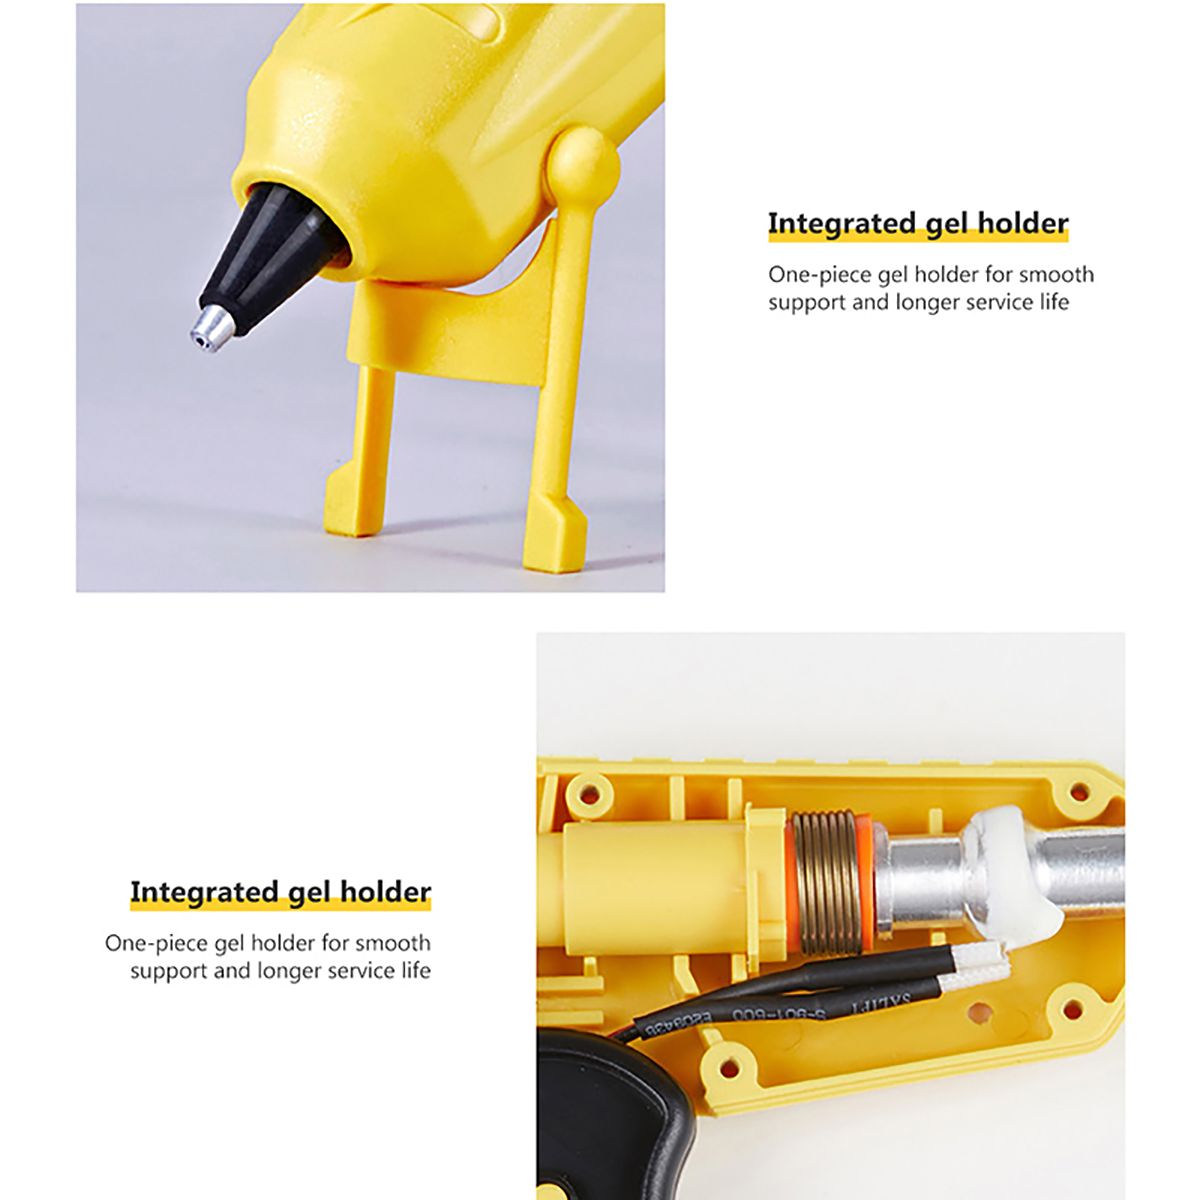 USB-Electric-Hot-Melt-Glue-Trigger-Adhesive-Sticks-Repair-Hobby-Craft-DIY-1653376